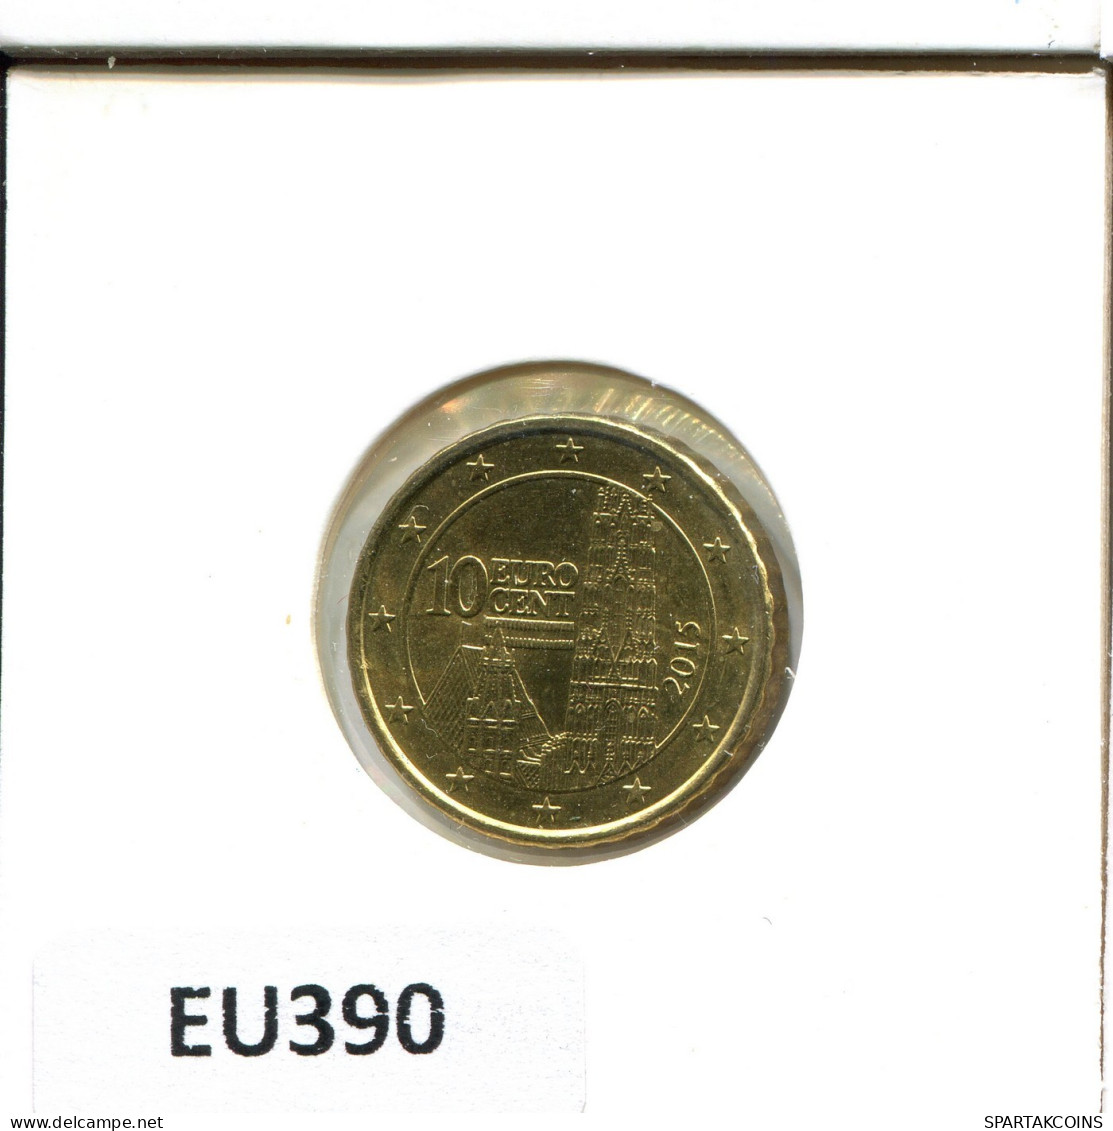 10 EURO CENTS 2015 ÖSTERREICH AUSTRIA Münze #EU390.D.A - Oostenrijk